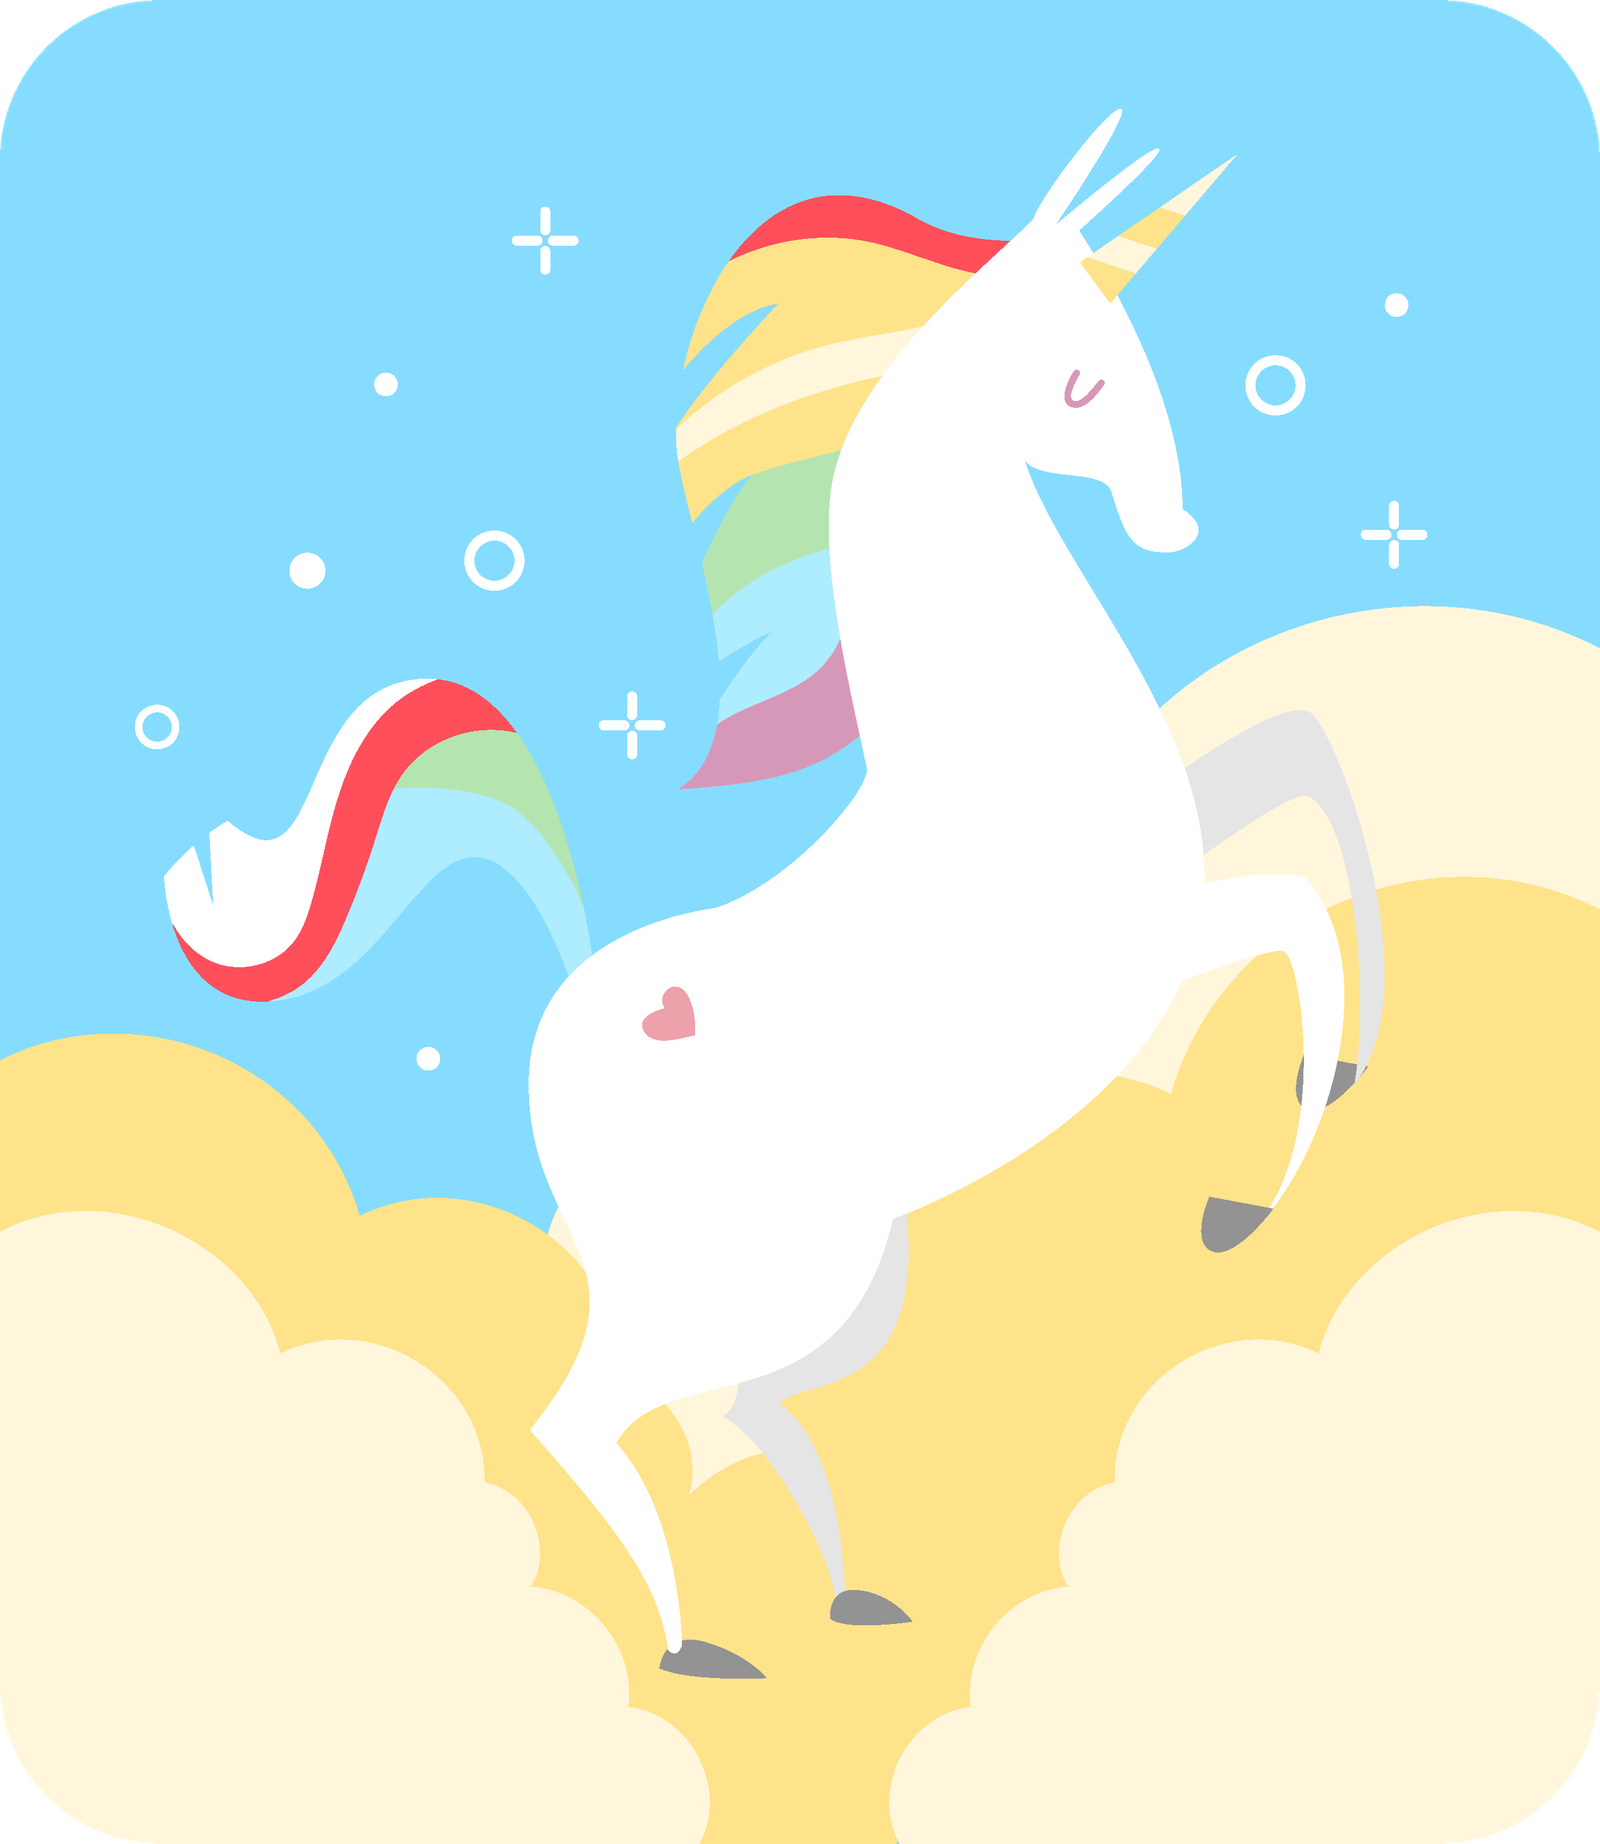 Startup Unicorn